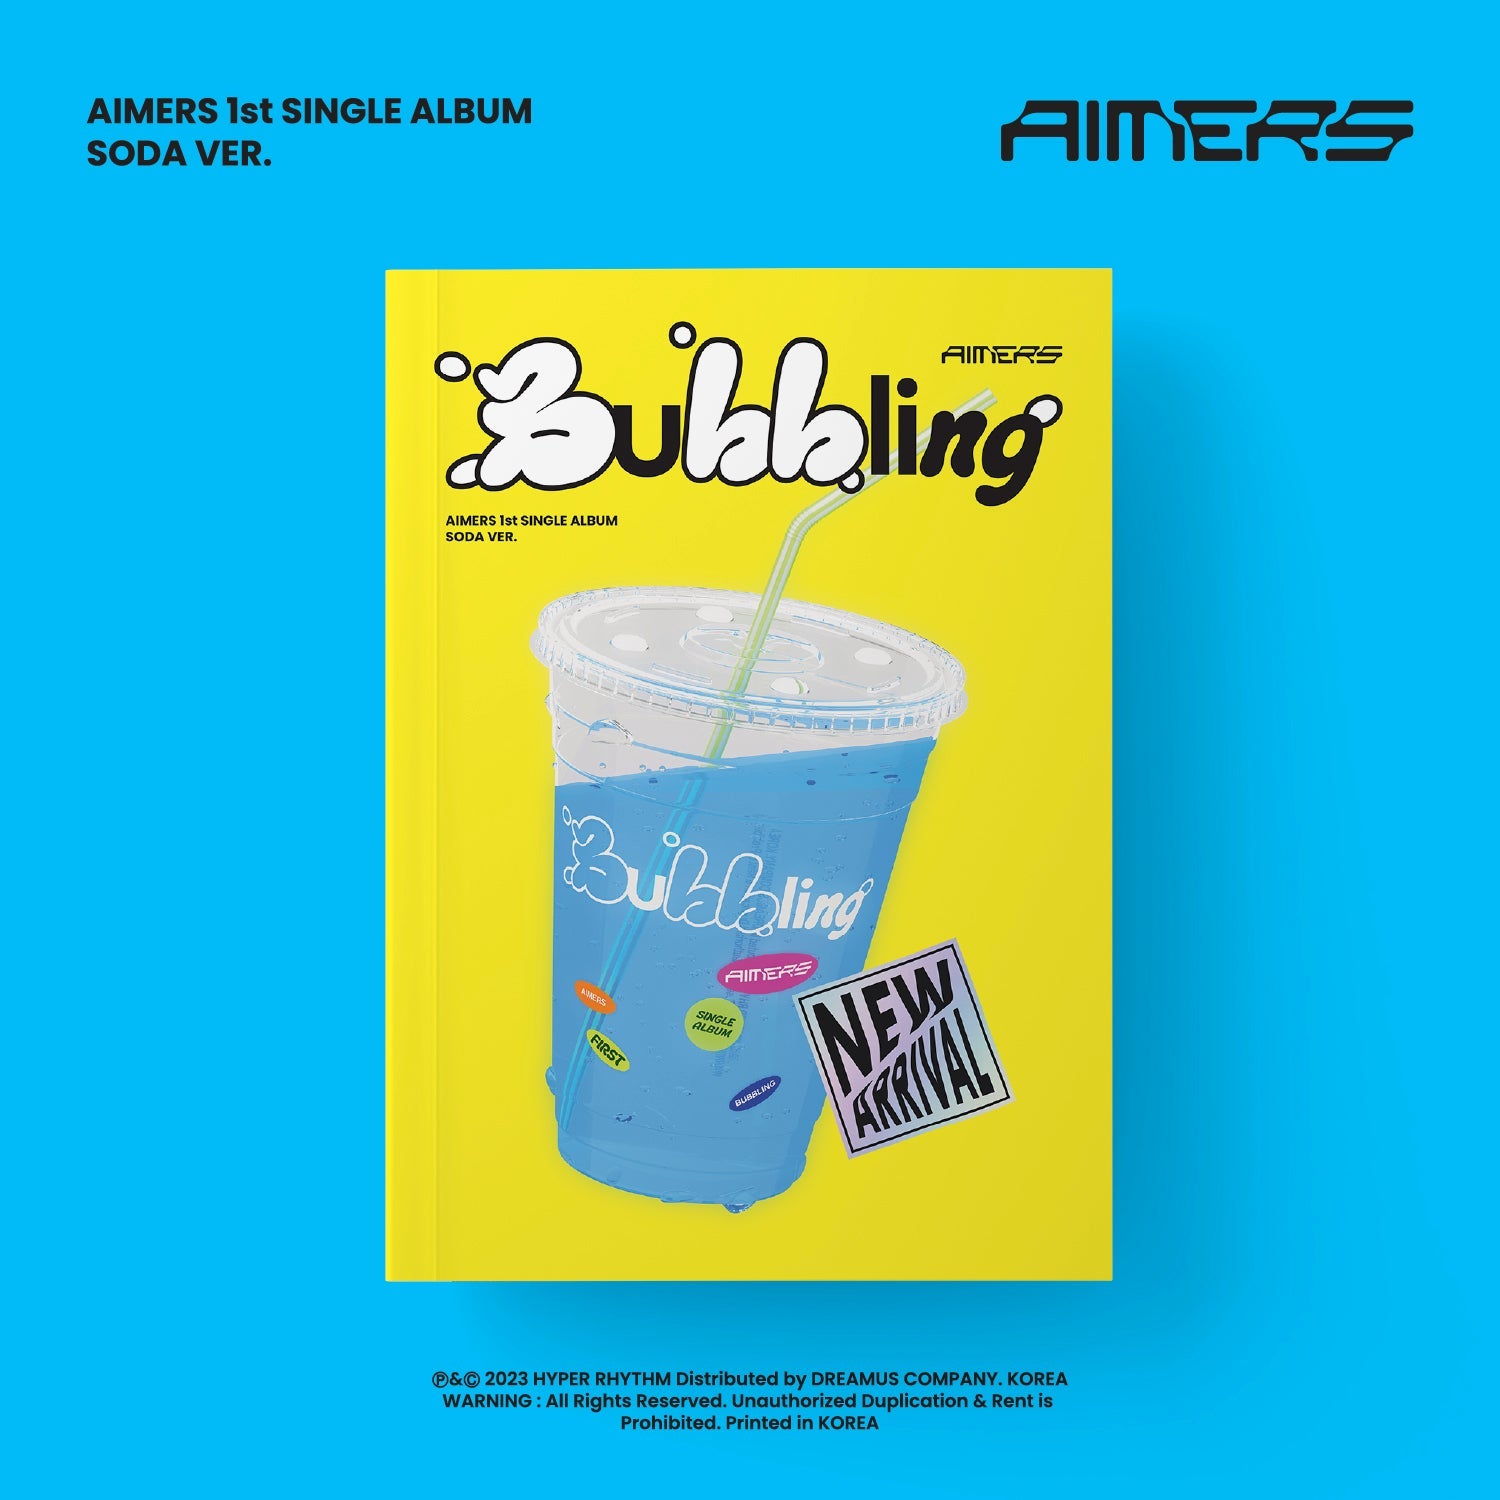 AIMERS 1ST SINGLE ALBUM 'BUBBLING' SODA VERSION COVER